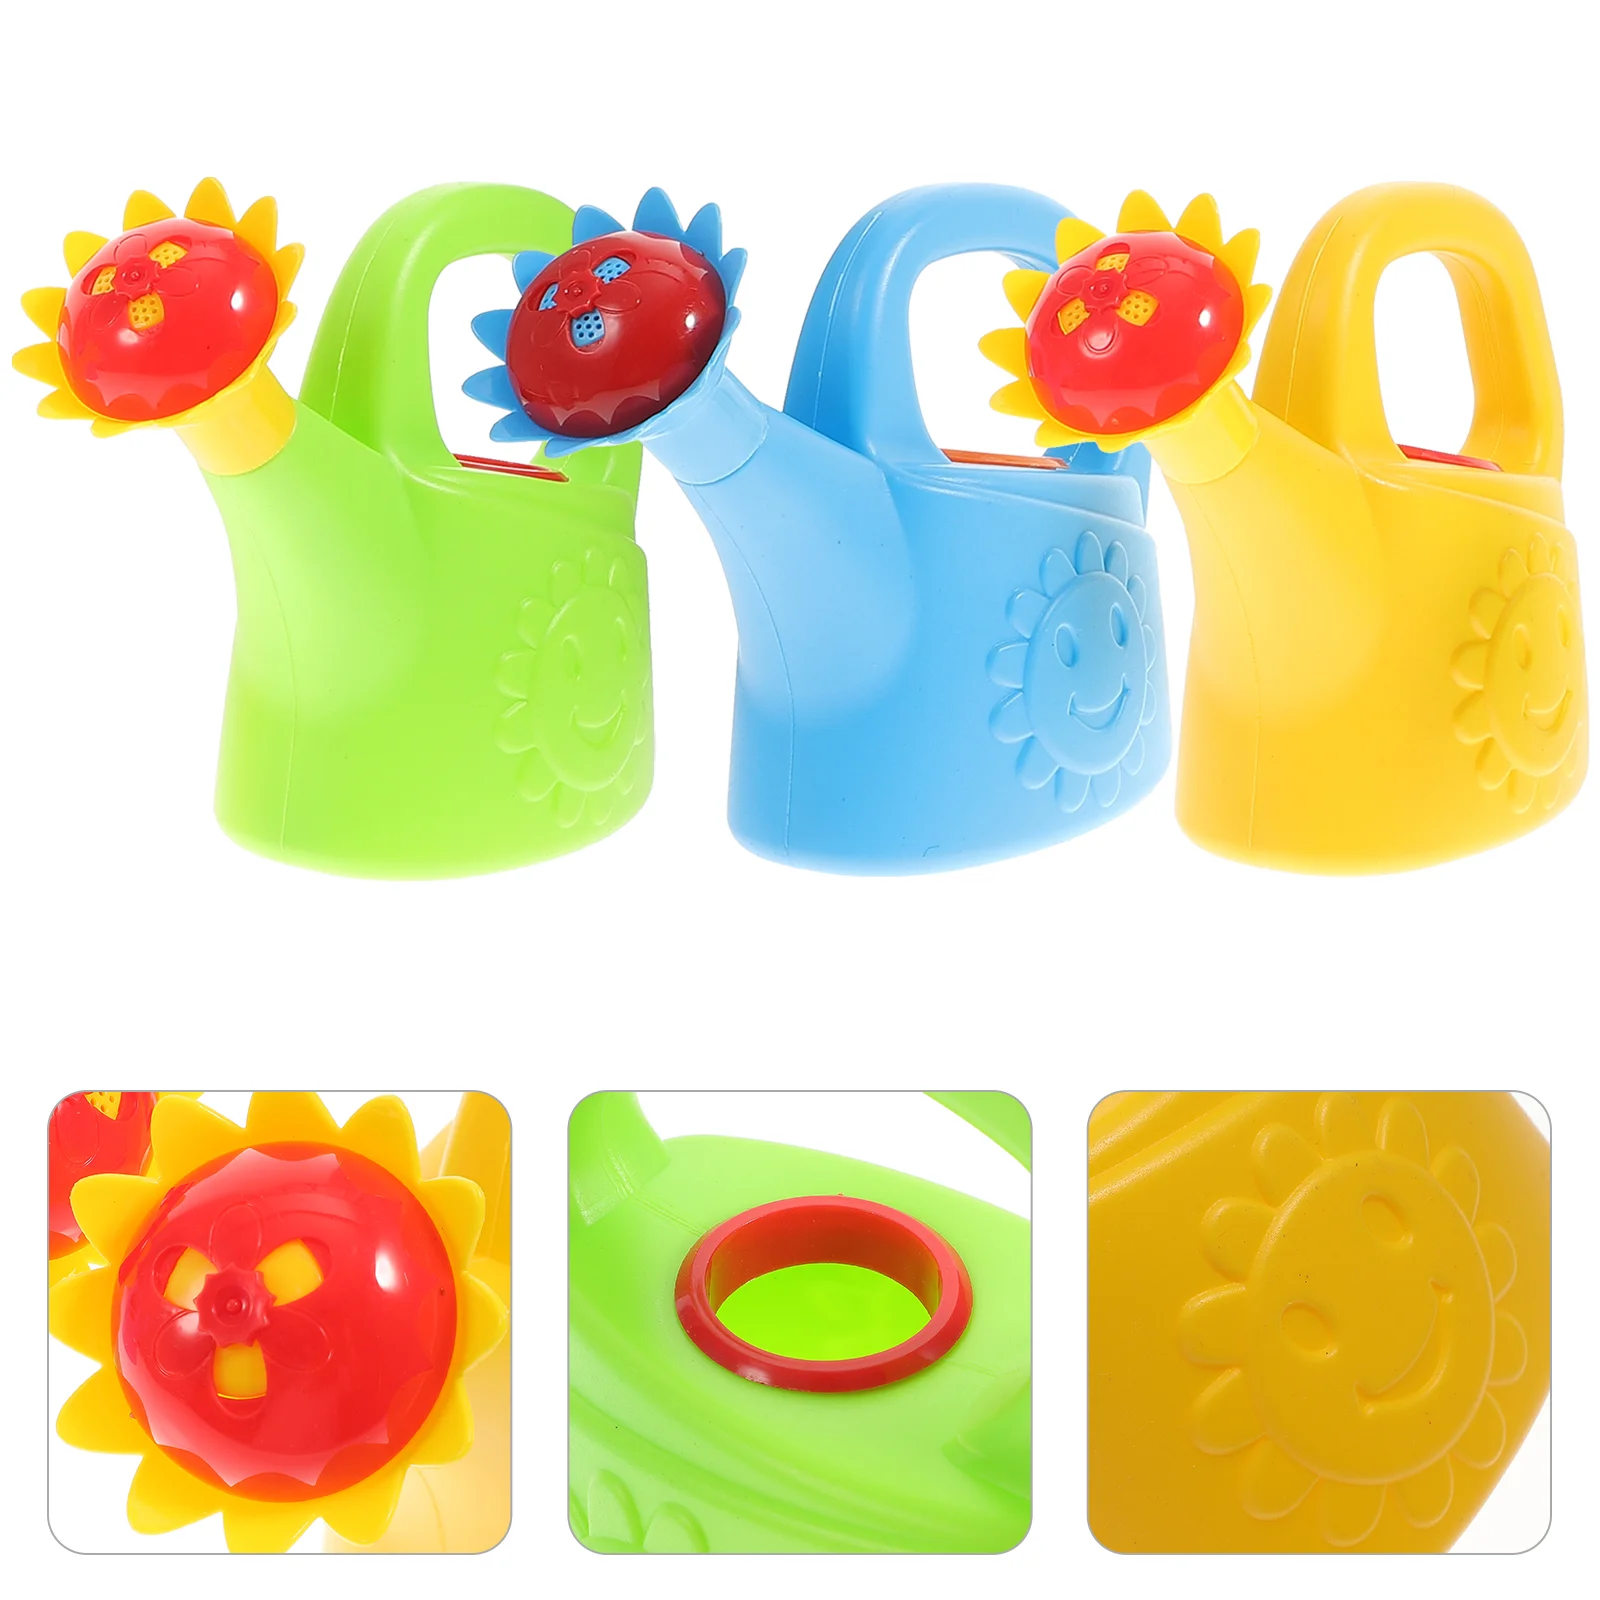 

3 Pcs Chicken Watering Can Household Garden Toy Bath Mist Spray Bottle Accessories Multi-function Plastic Interesting Child